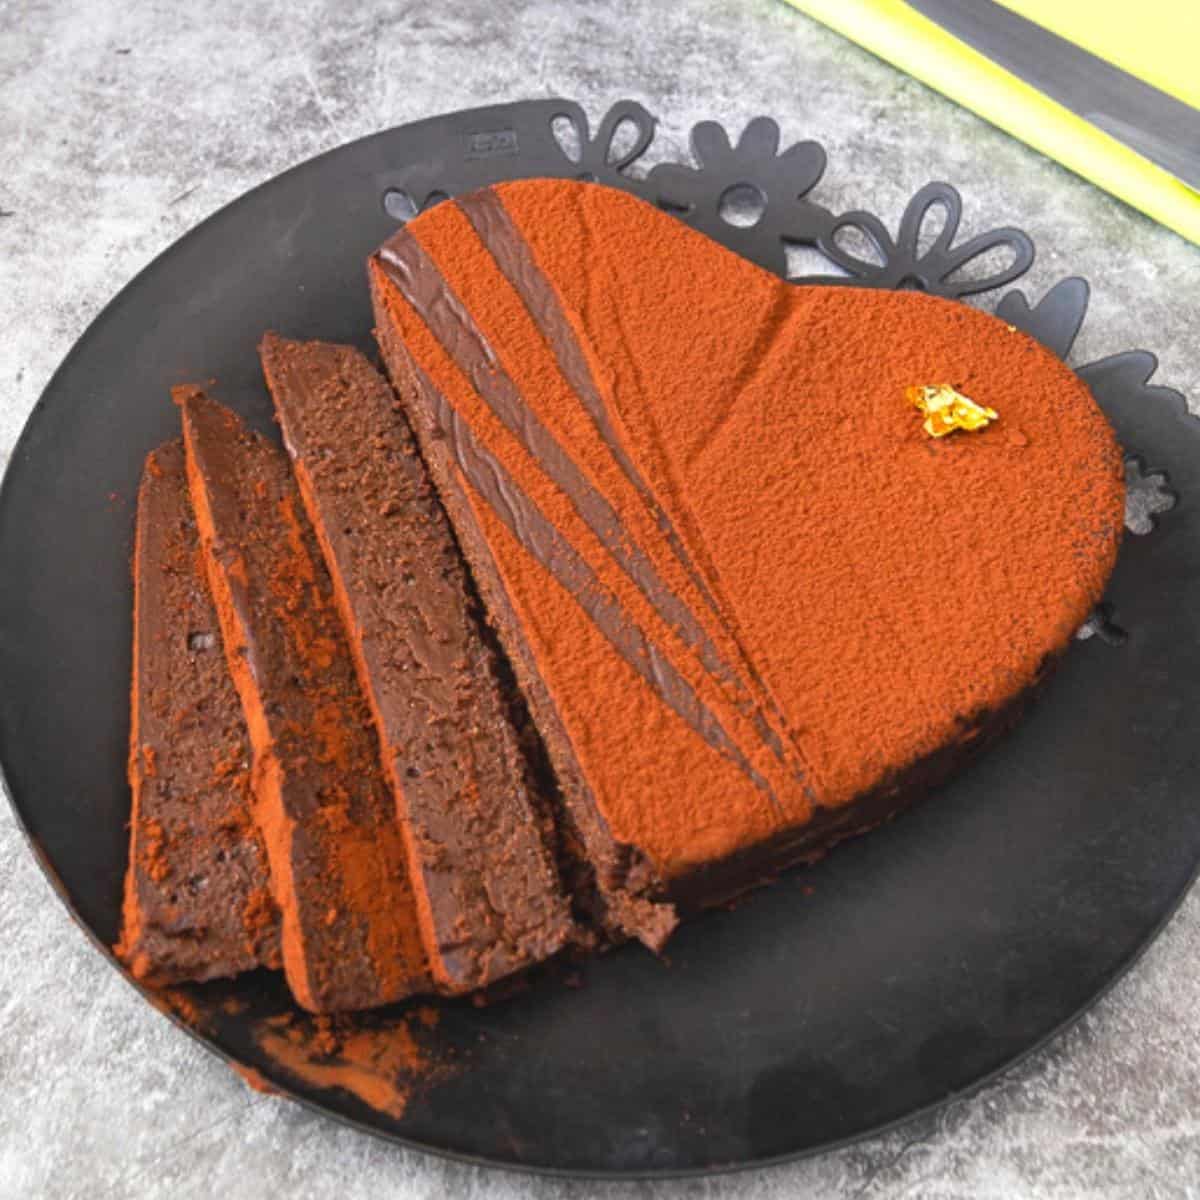 A sliced chocolate terrine on a black plate.